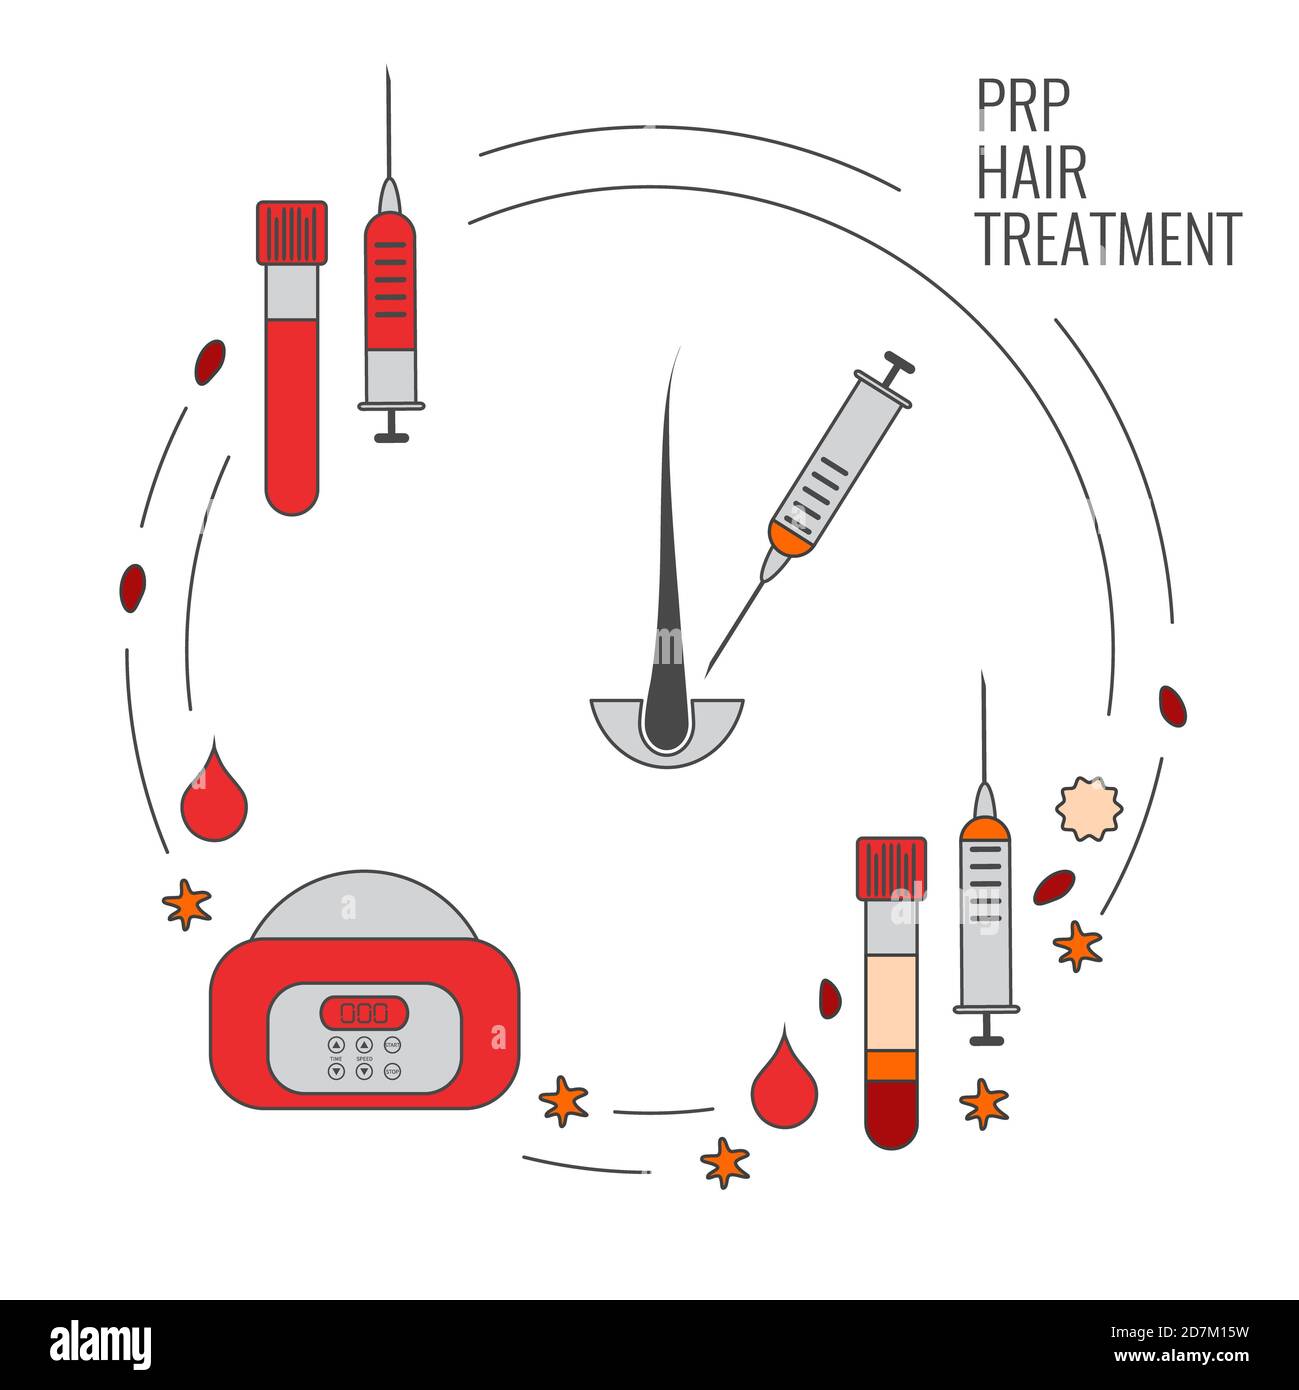 Platelet rich plasma (PRP) treatment, illustration. Stock Photo